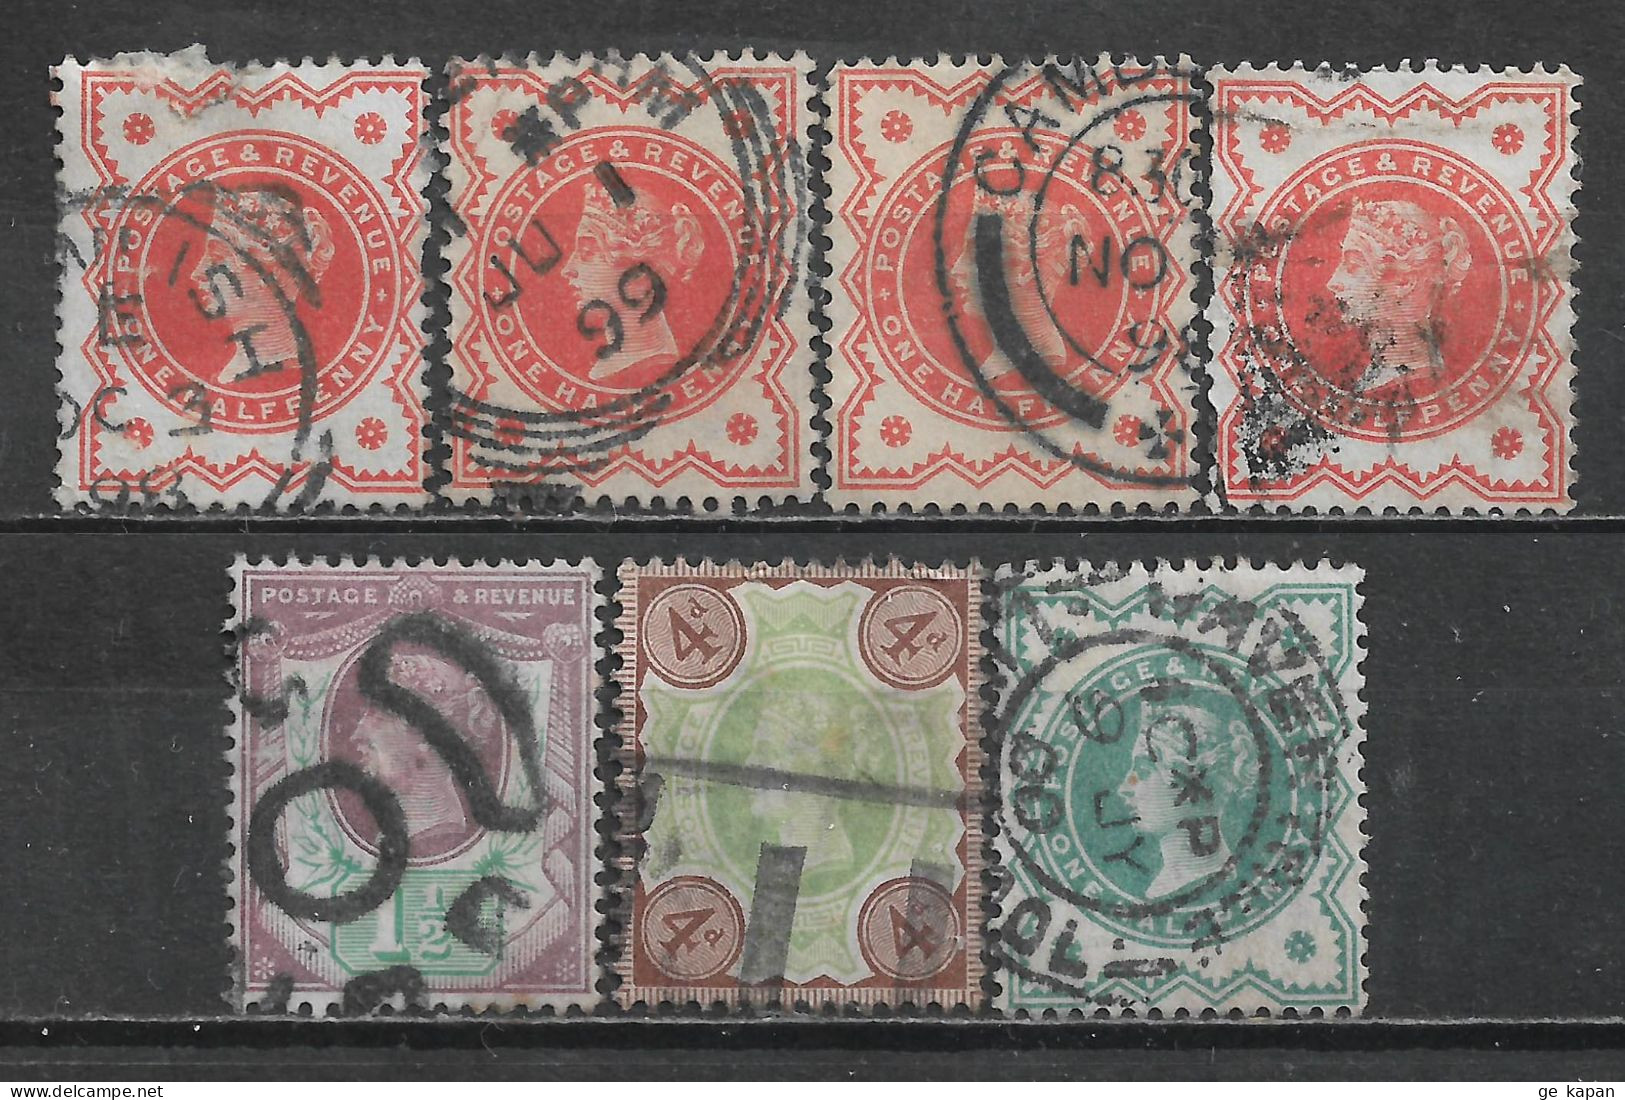 1887-1900 GREAT BRITAIN Set Of 7 Used Stamps (Scott # 111,112,116,125) CV $27.60 - Usados